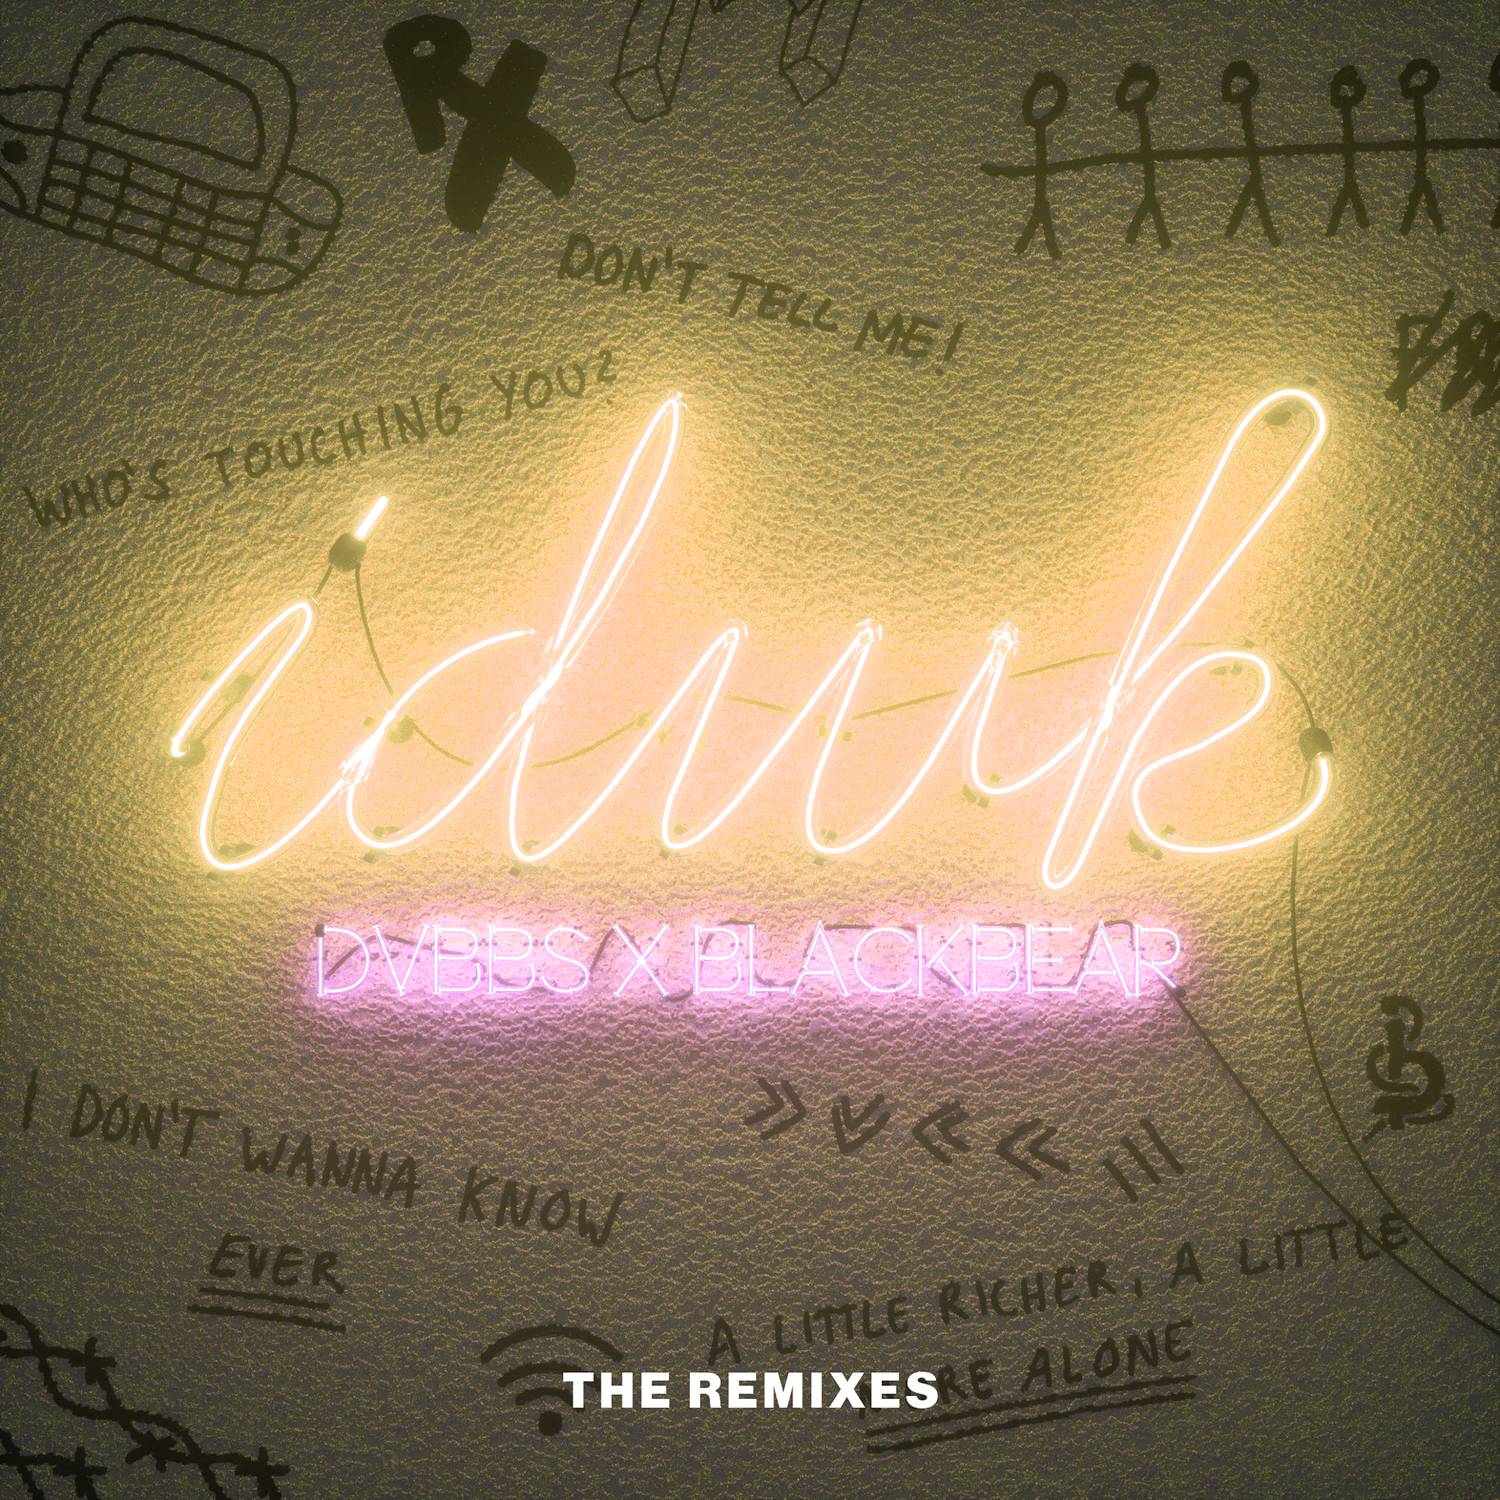 IDWK (Loud Luxury Remix)